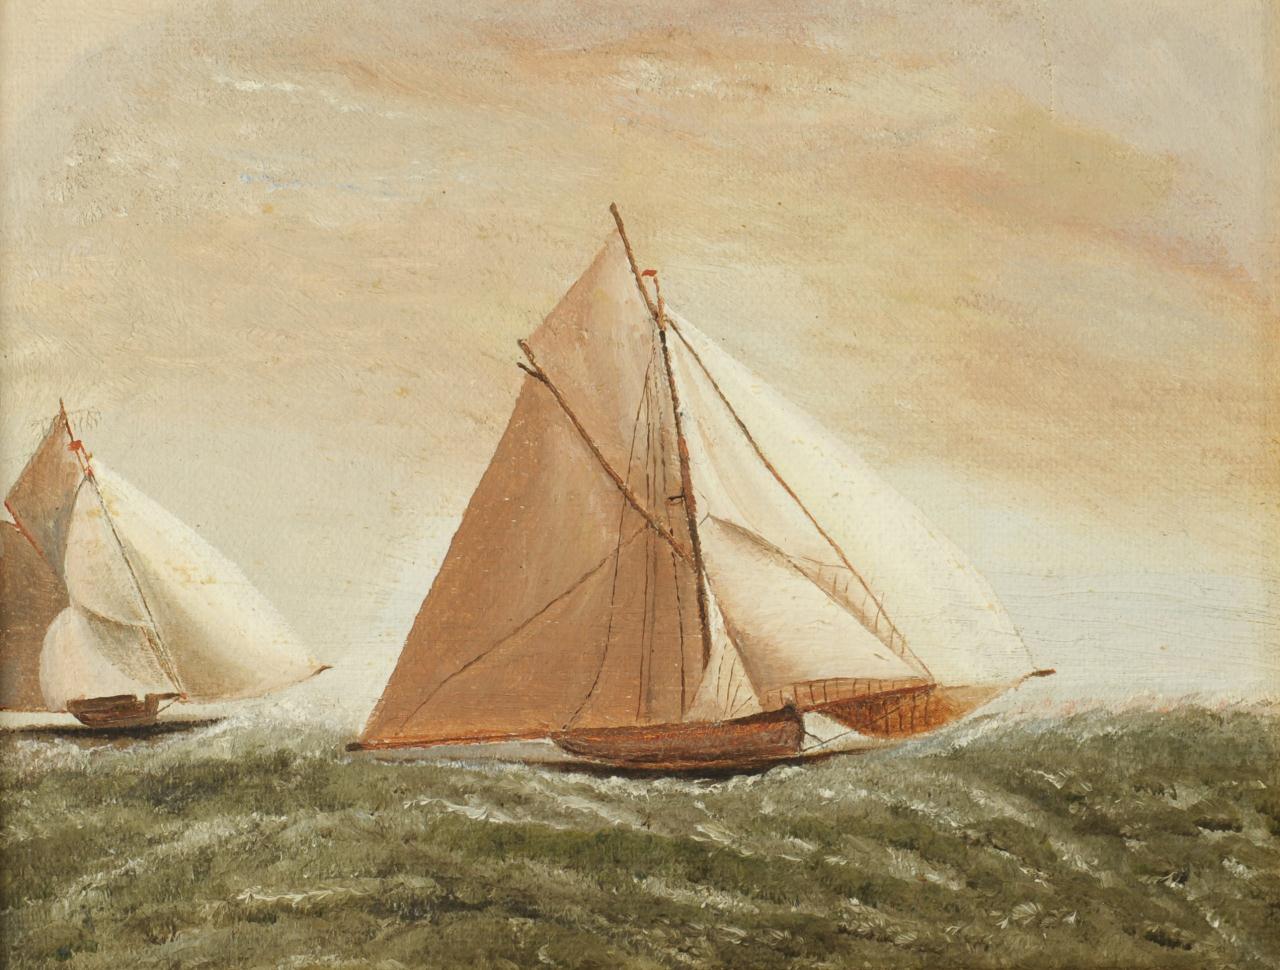 Lot 509: Pair of 19th century maritime paintings